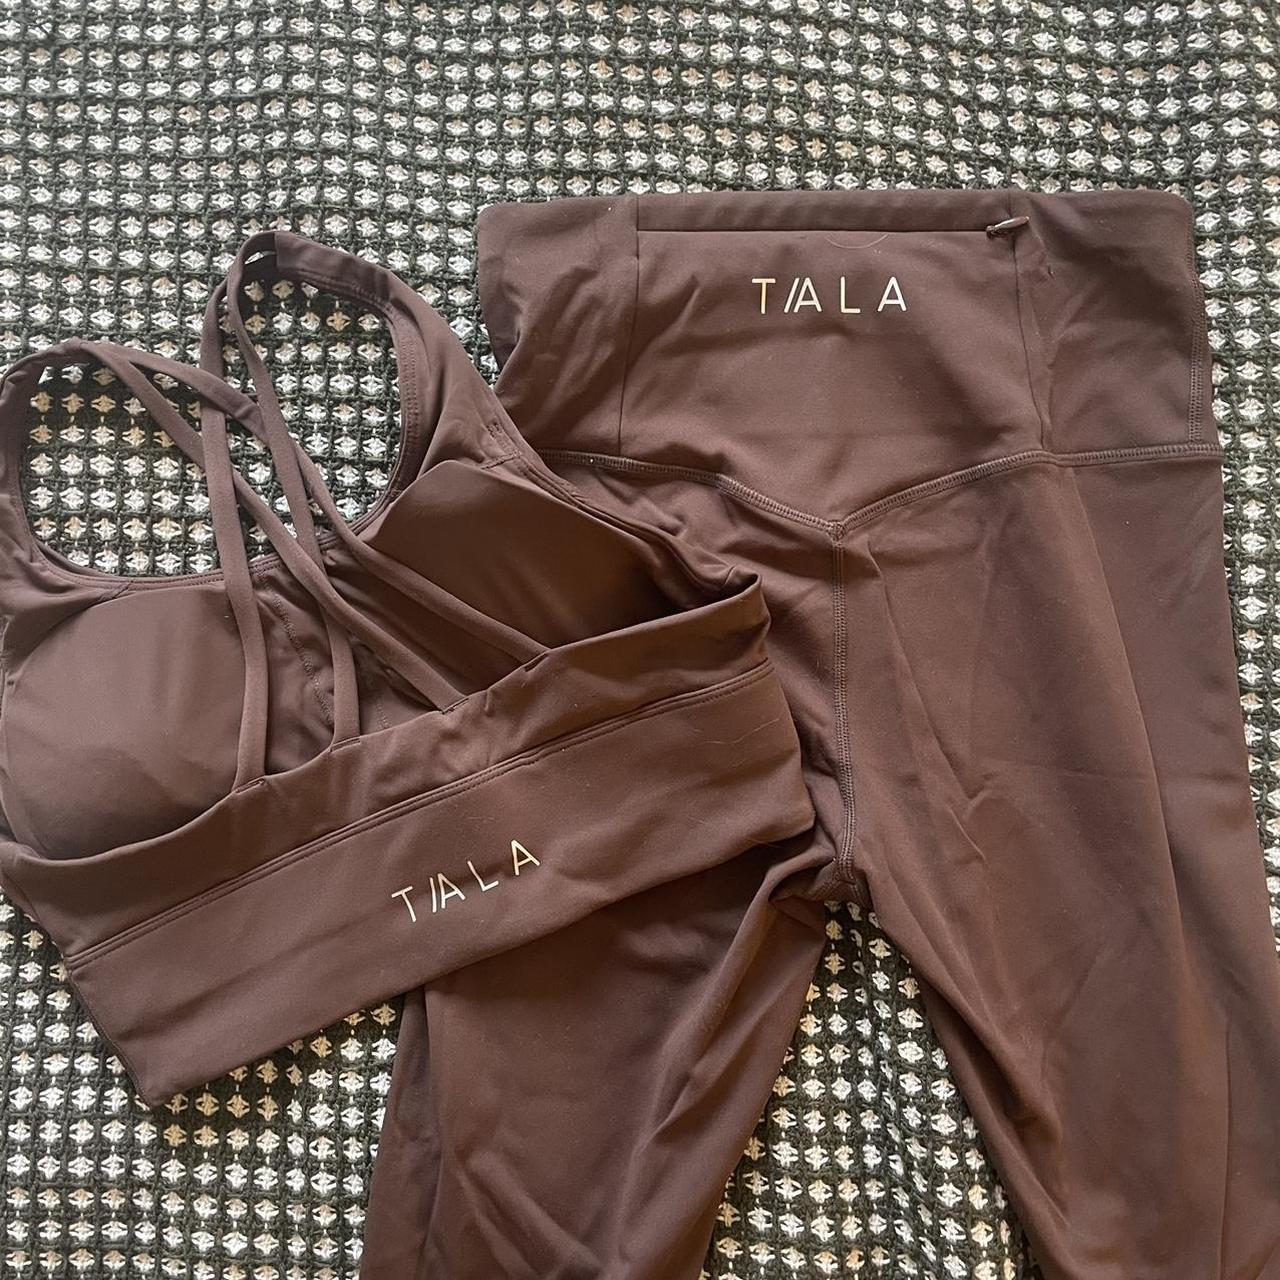 Tala SkinLuxe high waisted leggings and sports bra - Depop